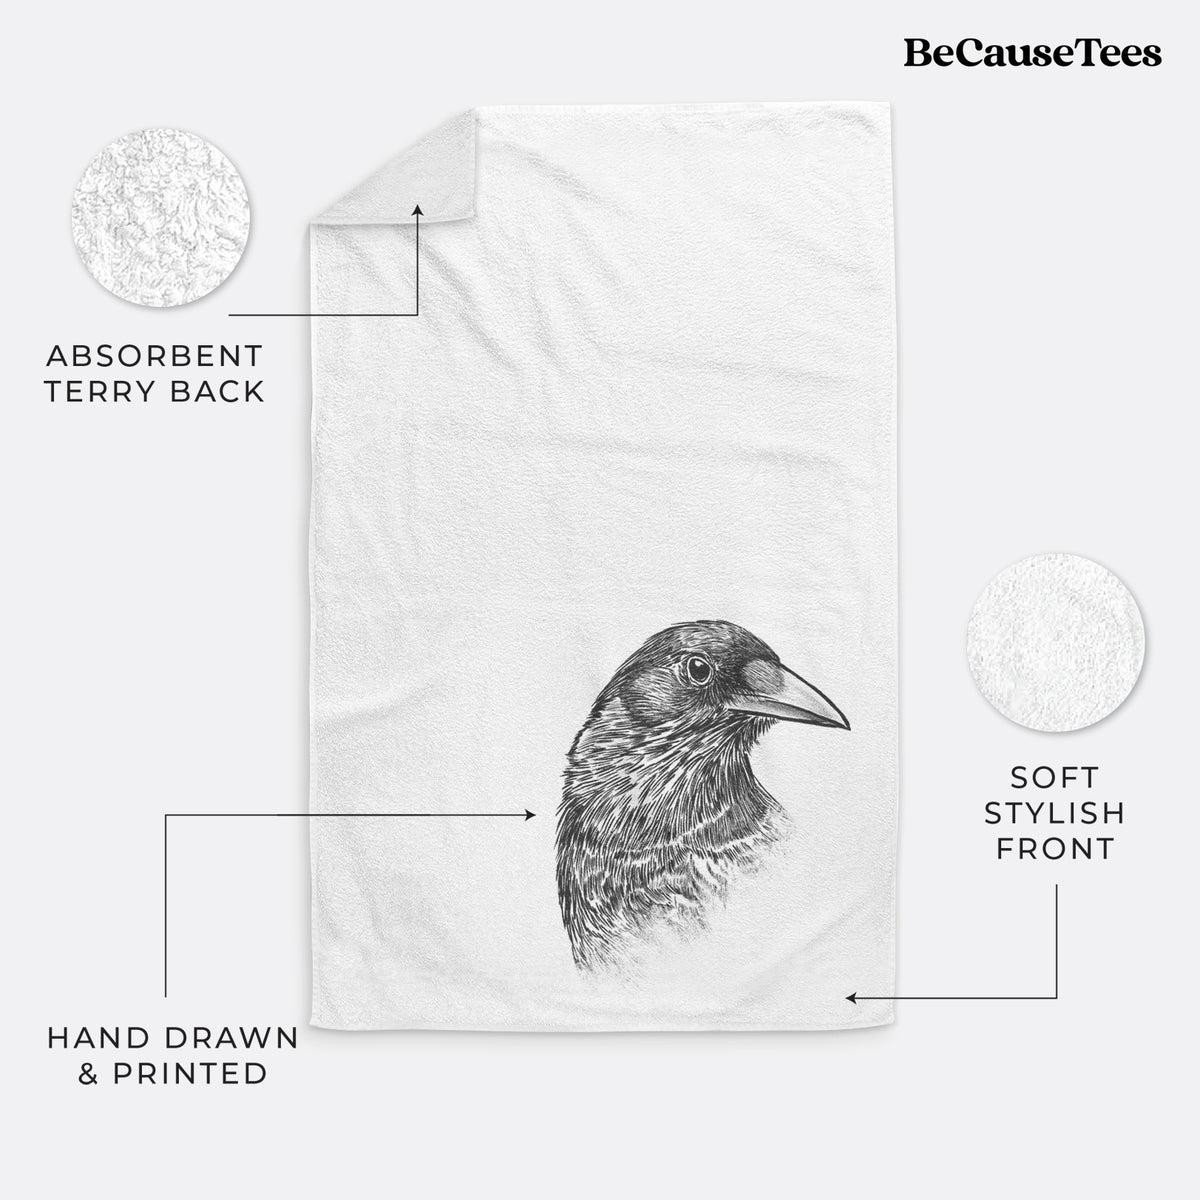 American Crow Bust - Corvus brachyrhynchos Hand Towel